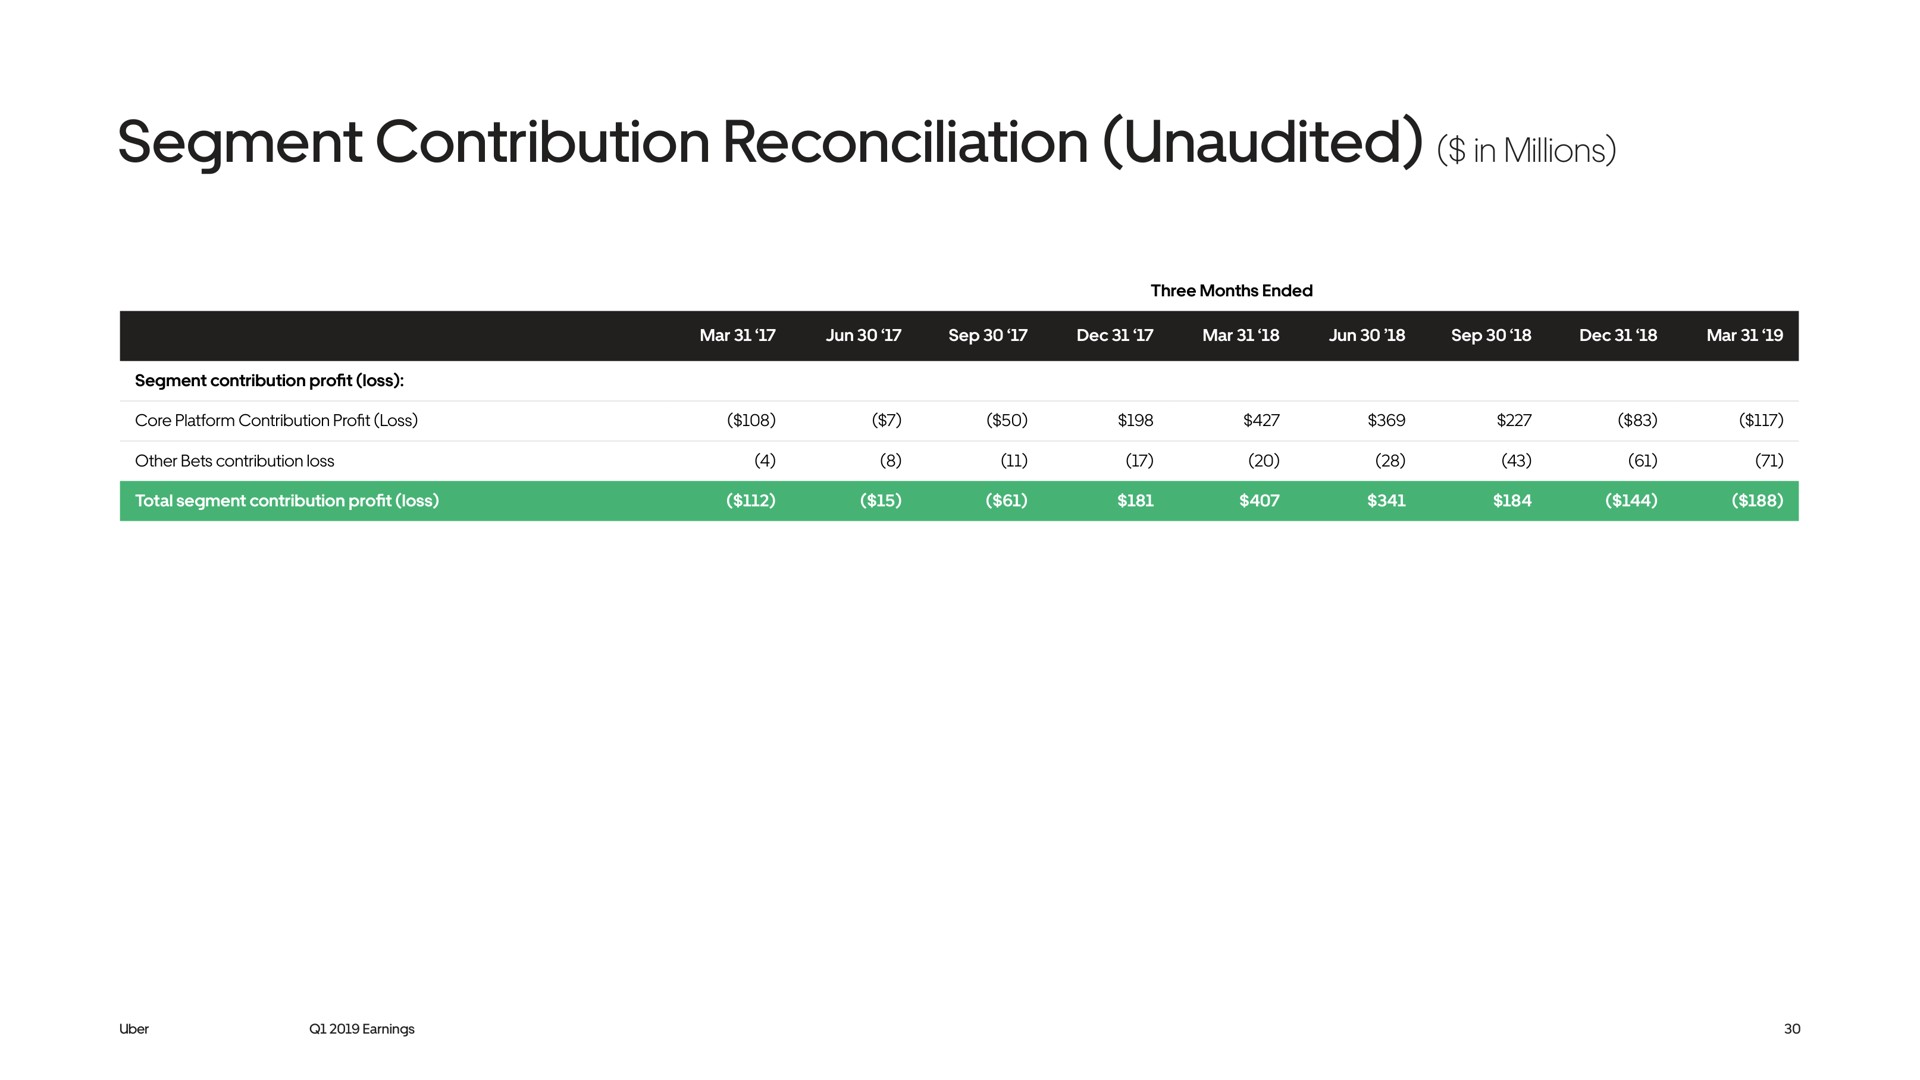 segment contribution reconciliation unaudited in millions total profit loss | Uber